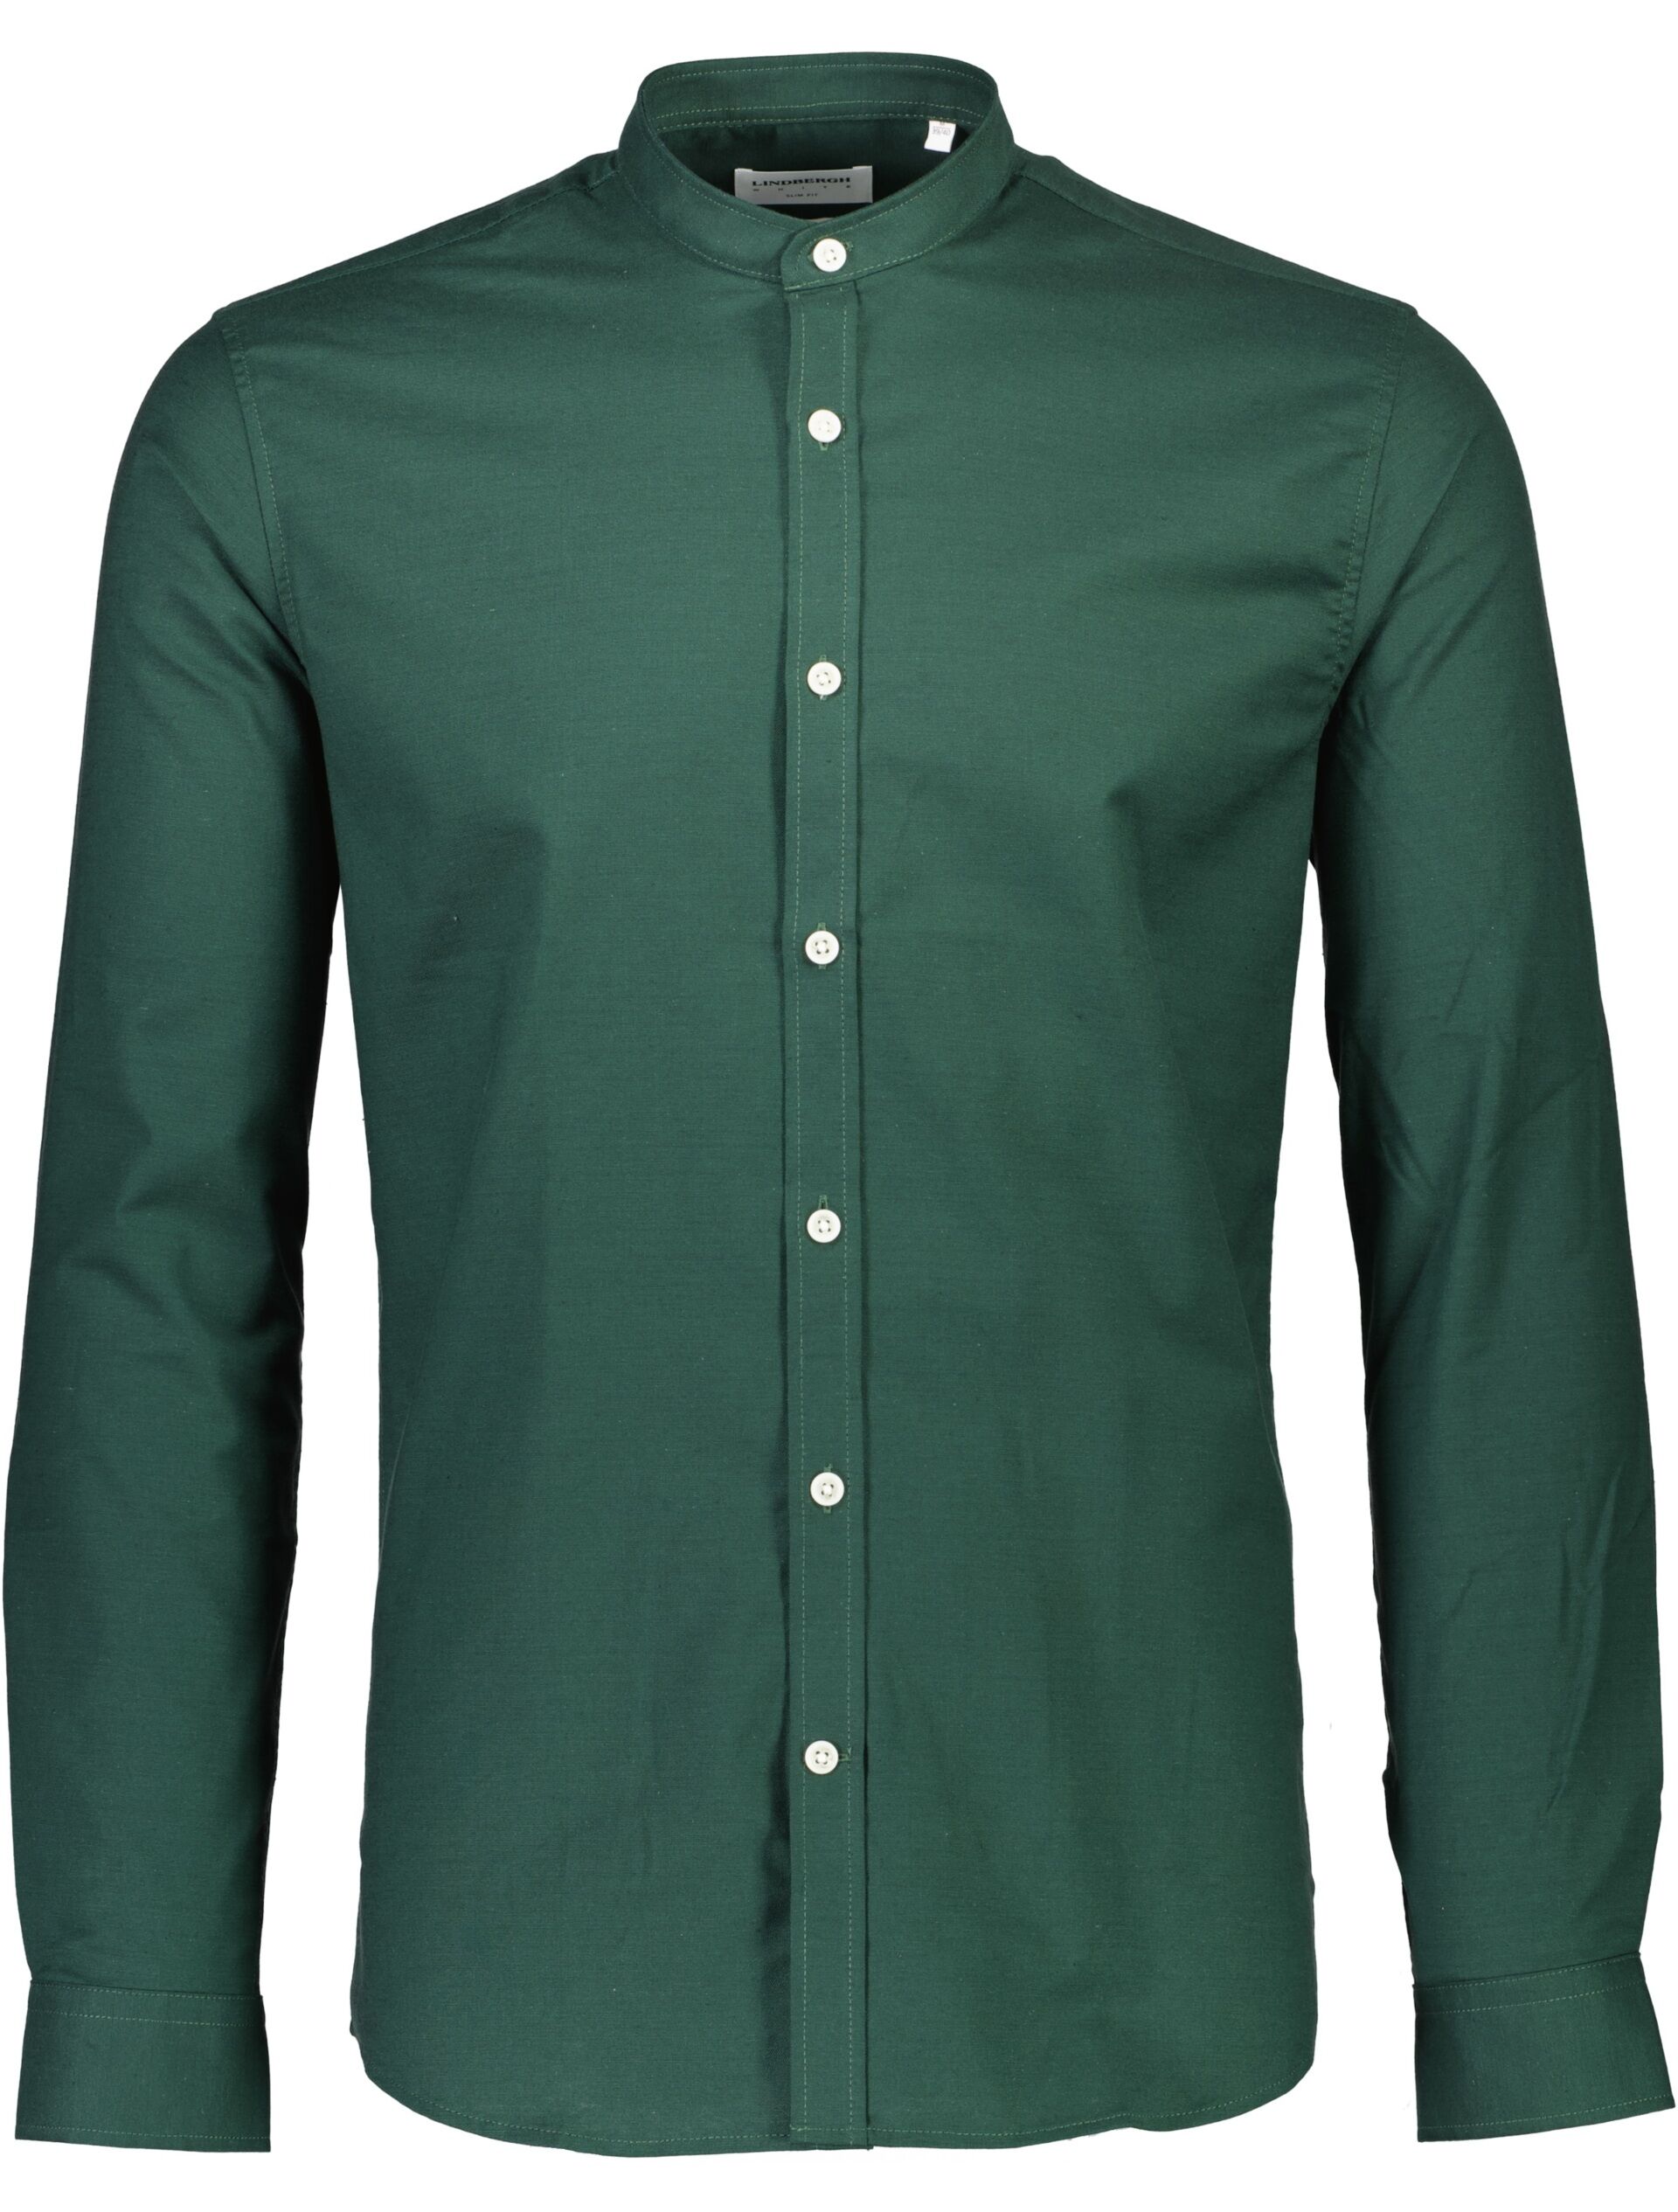 Oxford shirt 30-203174A